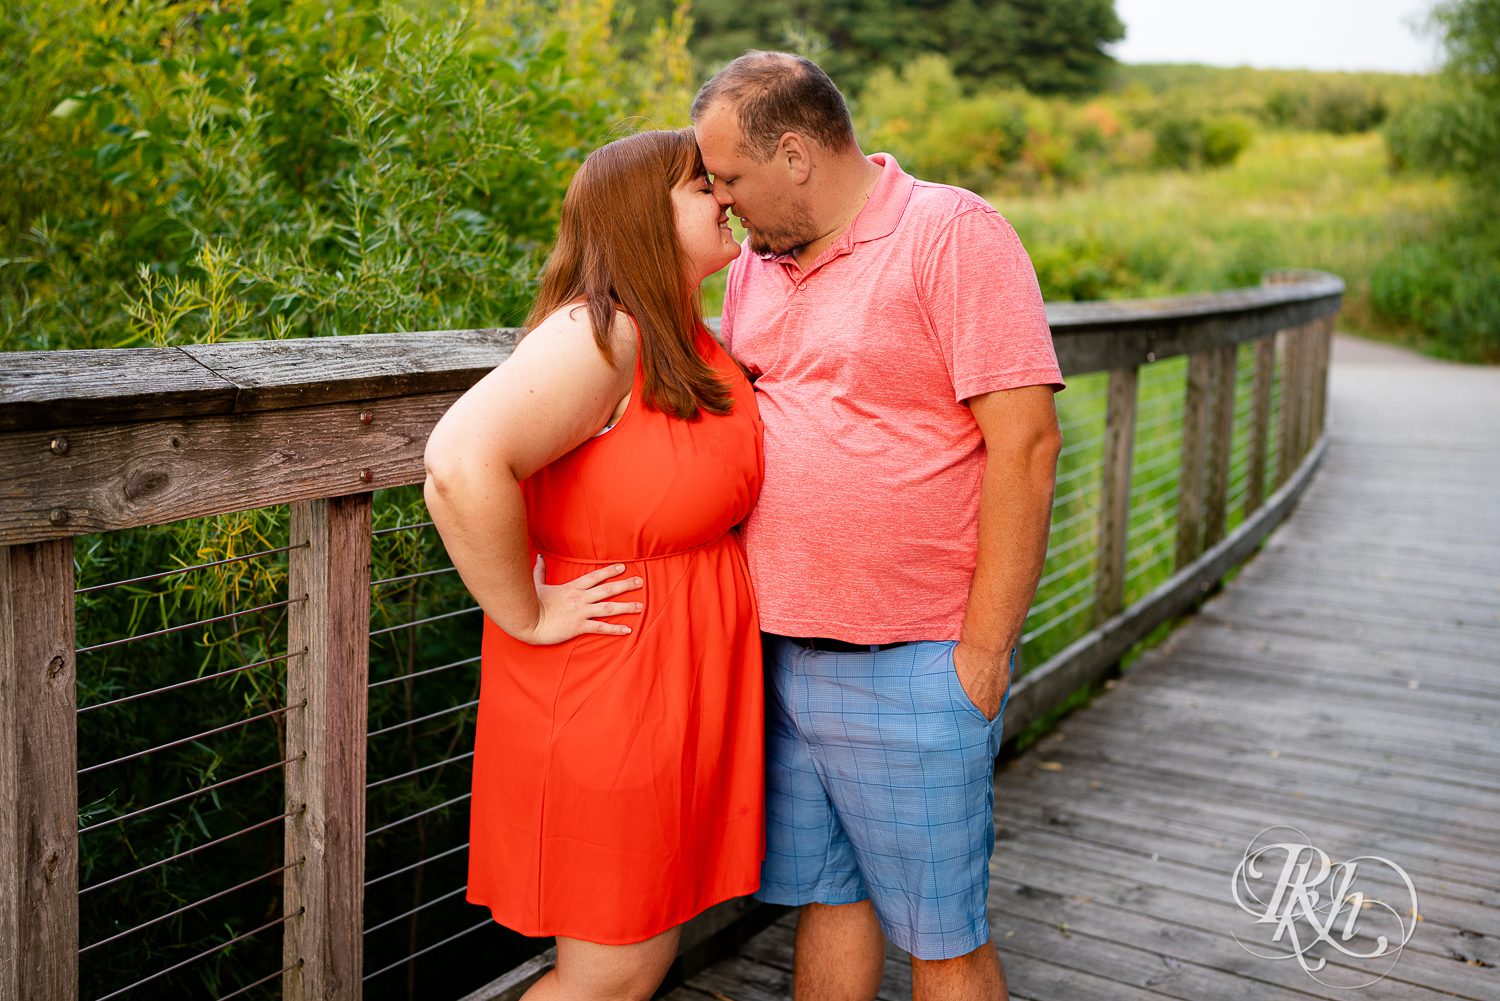 Man and women in orange dress kiss on bridge at Lebanon Hills Regional Park in Eagan, Minnesota.